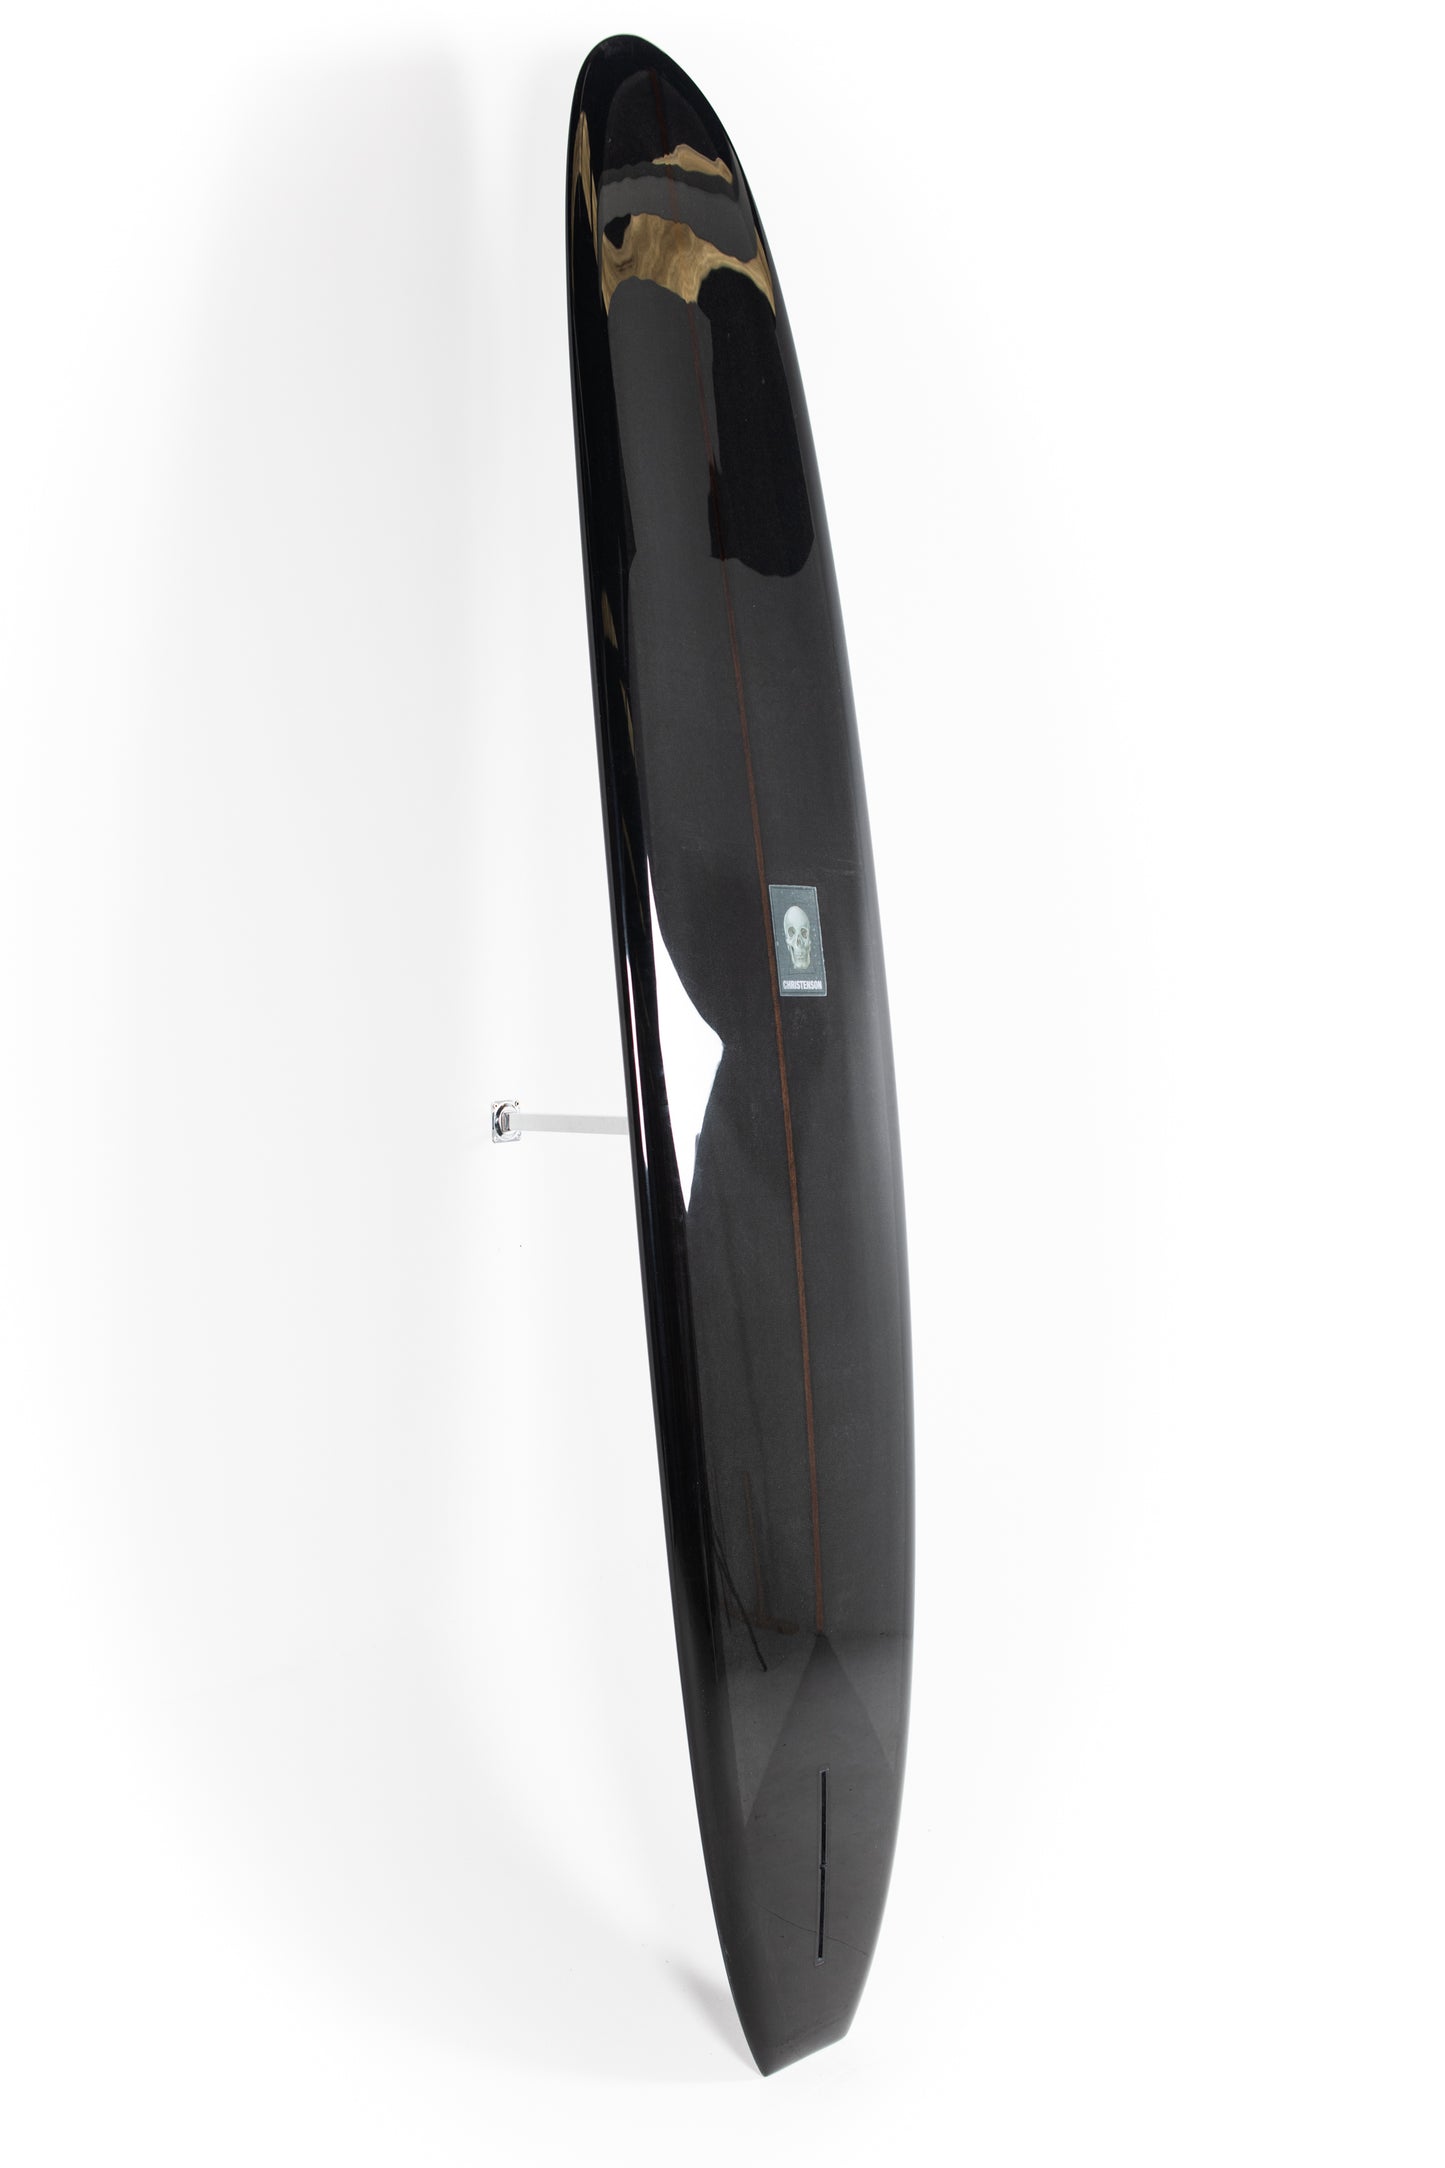 
                  
                    Pukas Surf Shop - Christenson Surfboard  - DEAD SLED by Chris Christenson - 9'0” x 22 1/2 x 2 13/16 - CX03184
                  
                